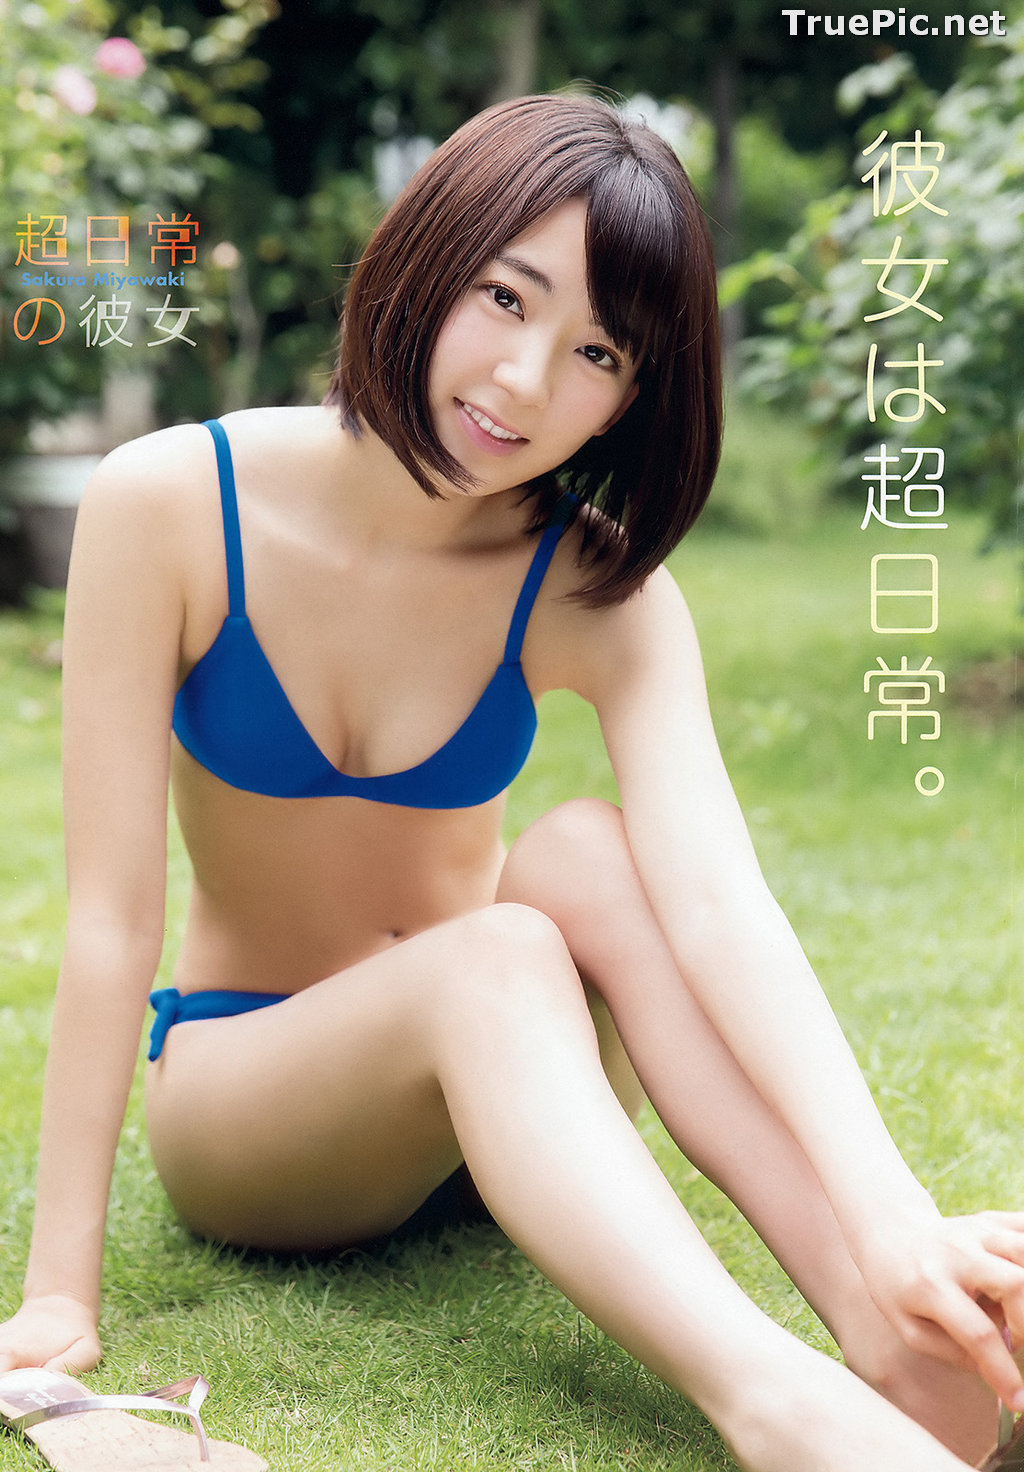 Image Japanese Singer and Actress - Sakura Miyawaki (宮脇咲良) - Sexy Picture Collection 2021 - TruePic.net - Picture-185